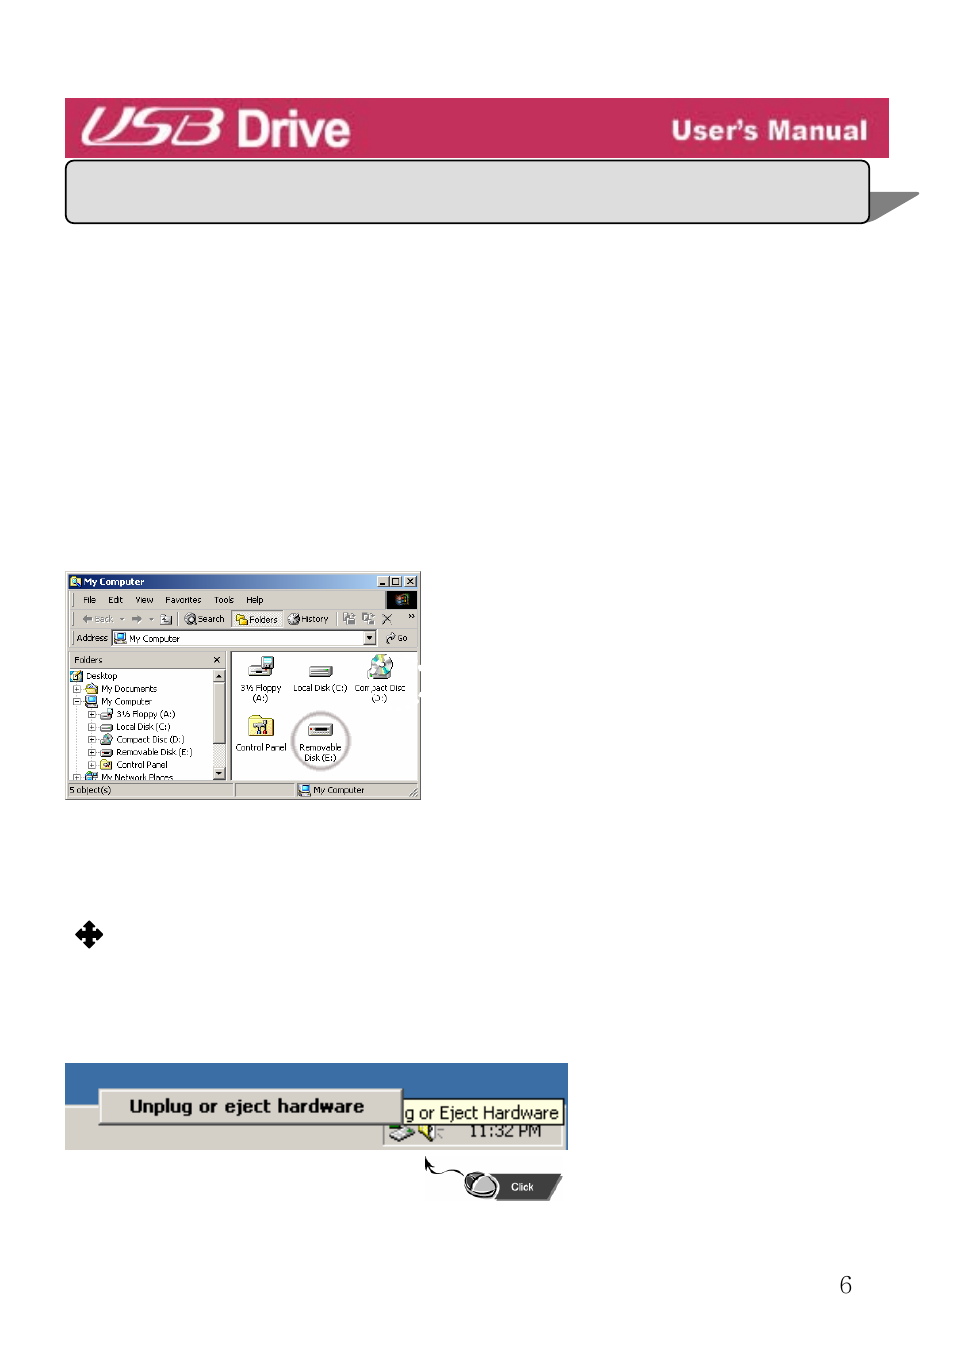 Installing/using usb drive in windows me/2000/xp | LG USB Drive User Manual | Page 6 / 22